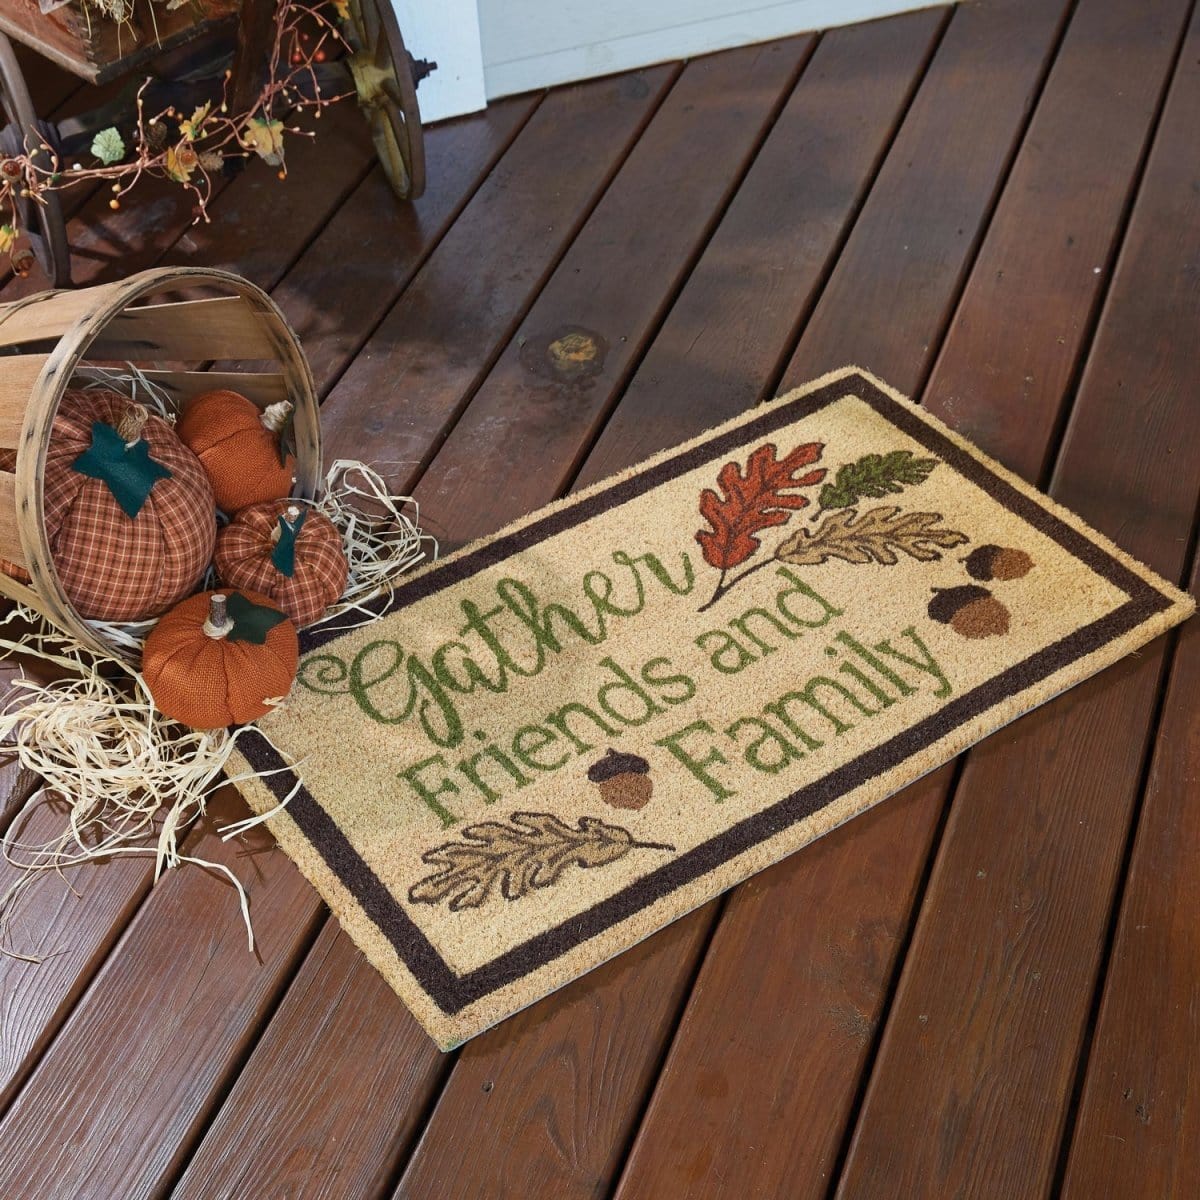 gather friends and family Doormat-Park Designs-The Village Merchant